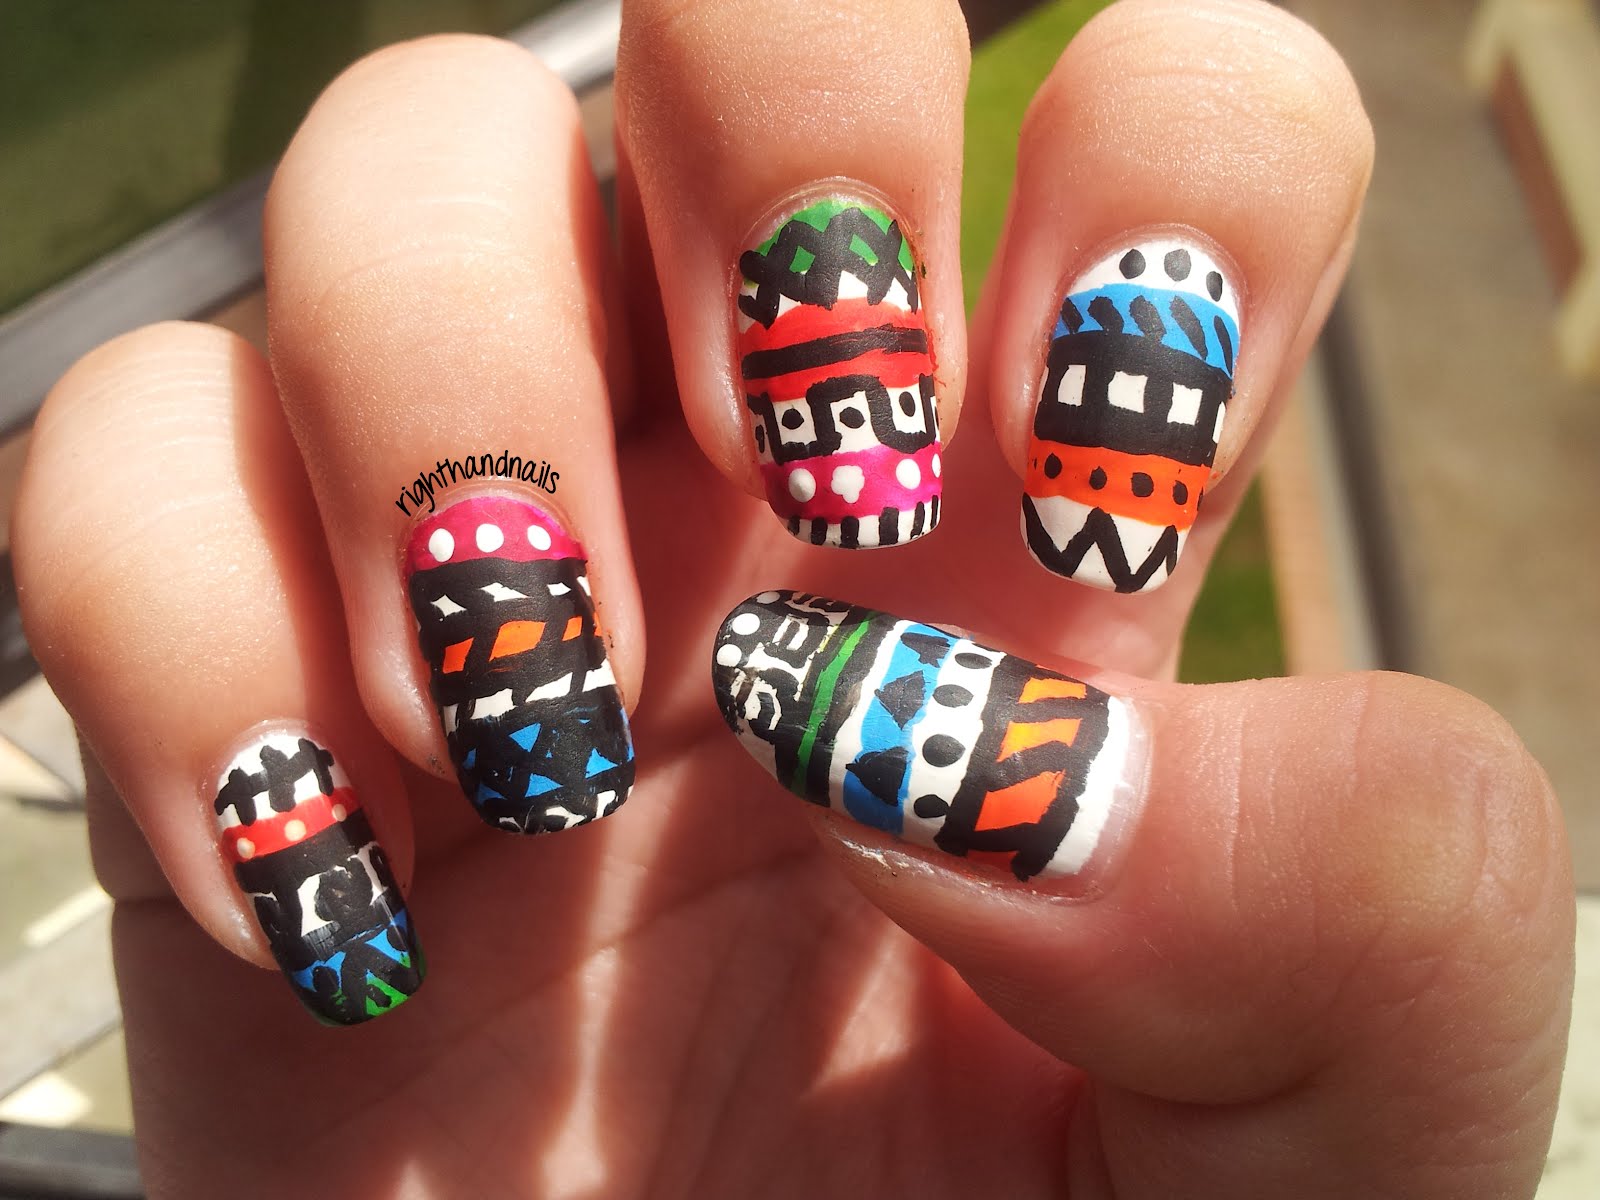 righthandnails: Tribal nails!